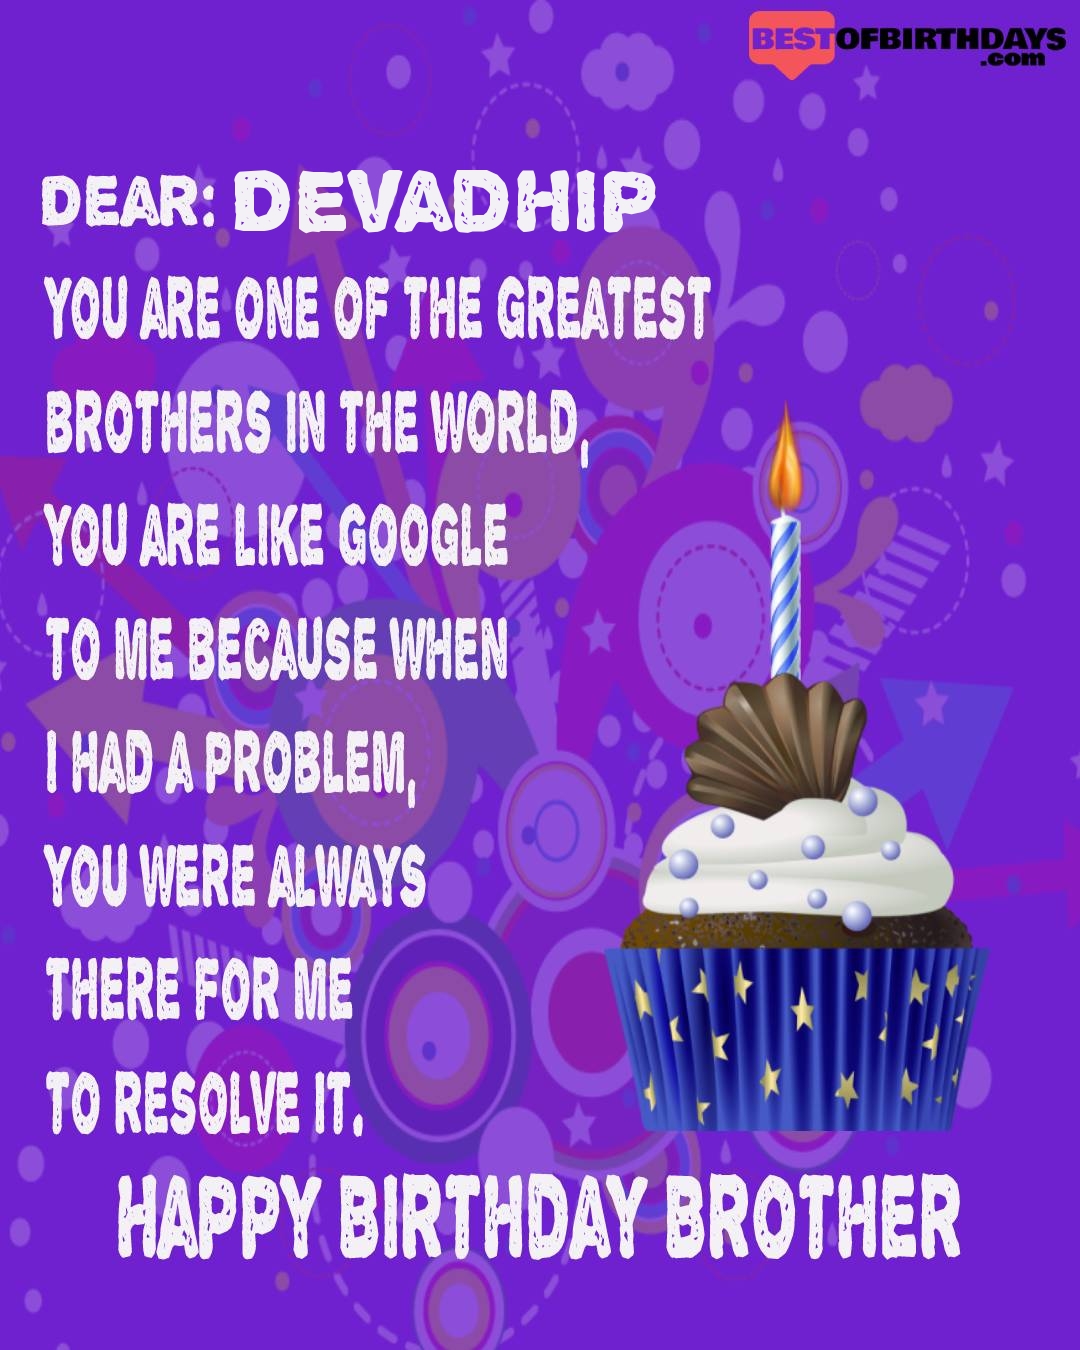 Happy birthday devadhip bhai brother bro